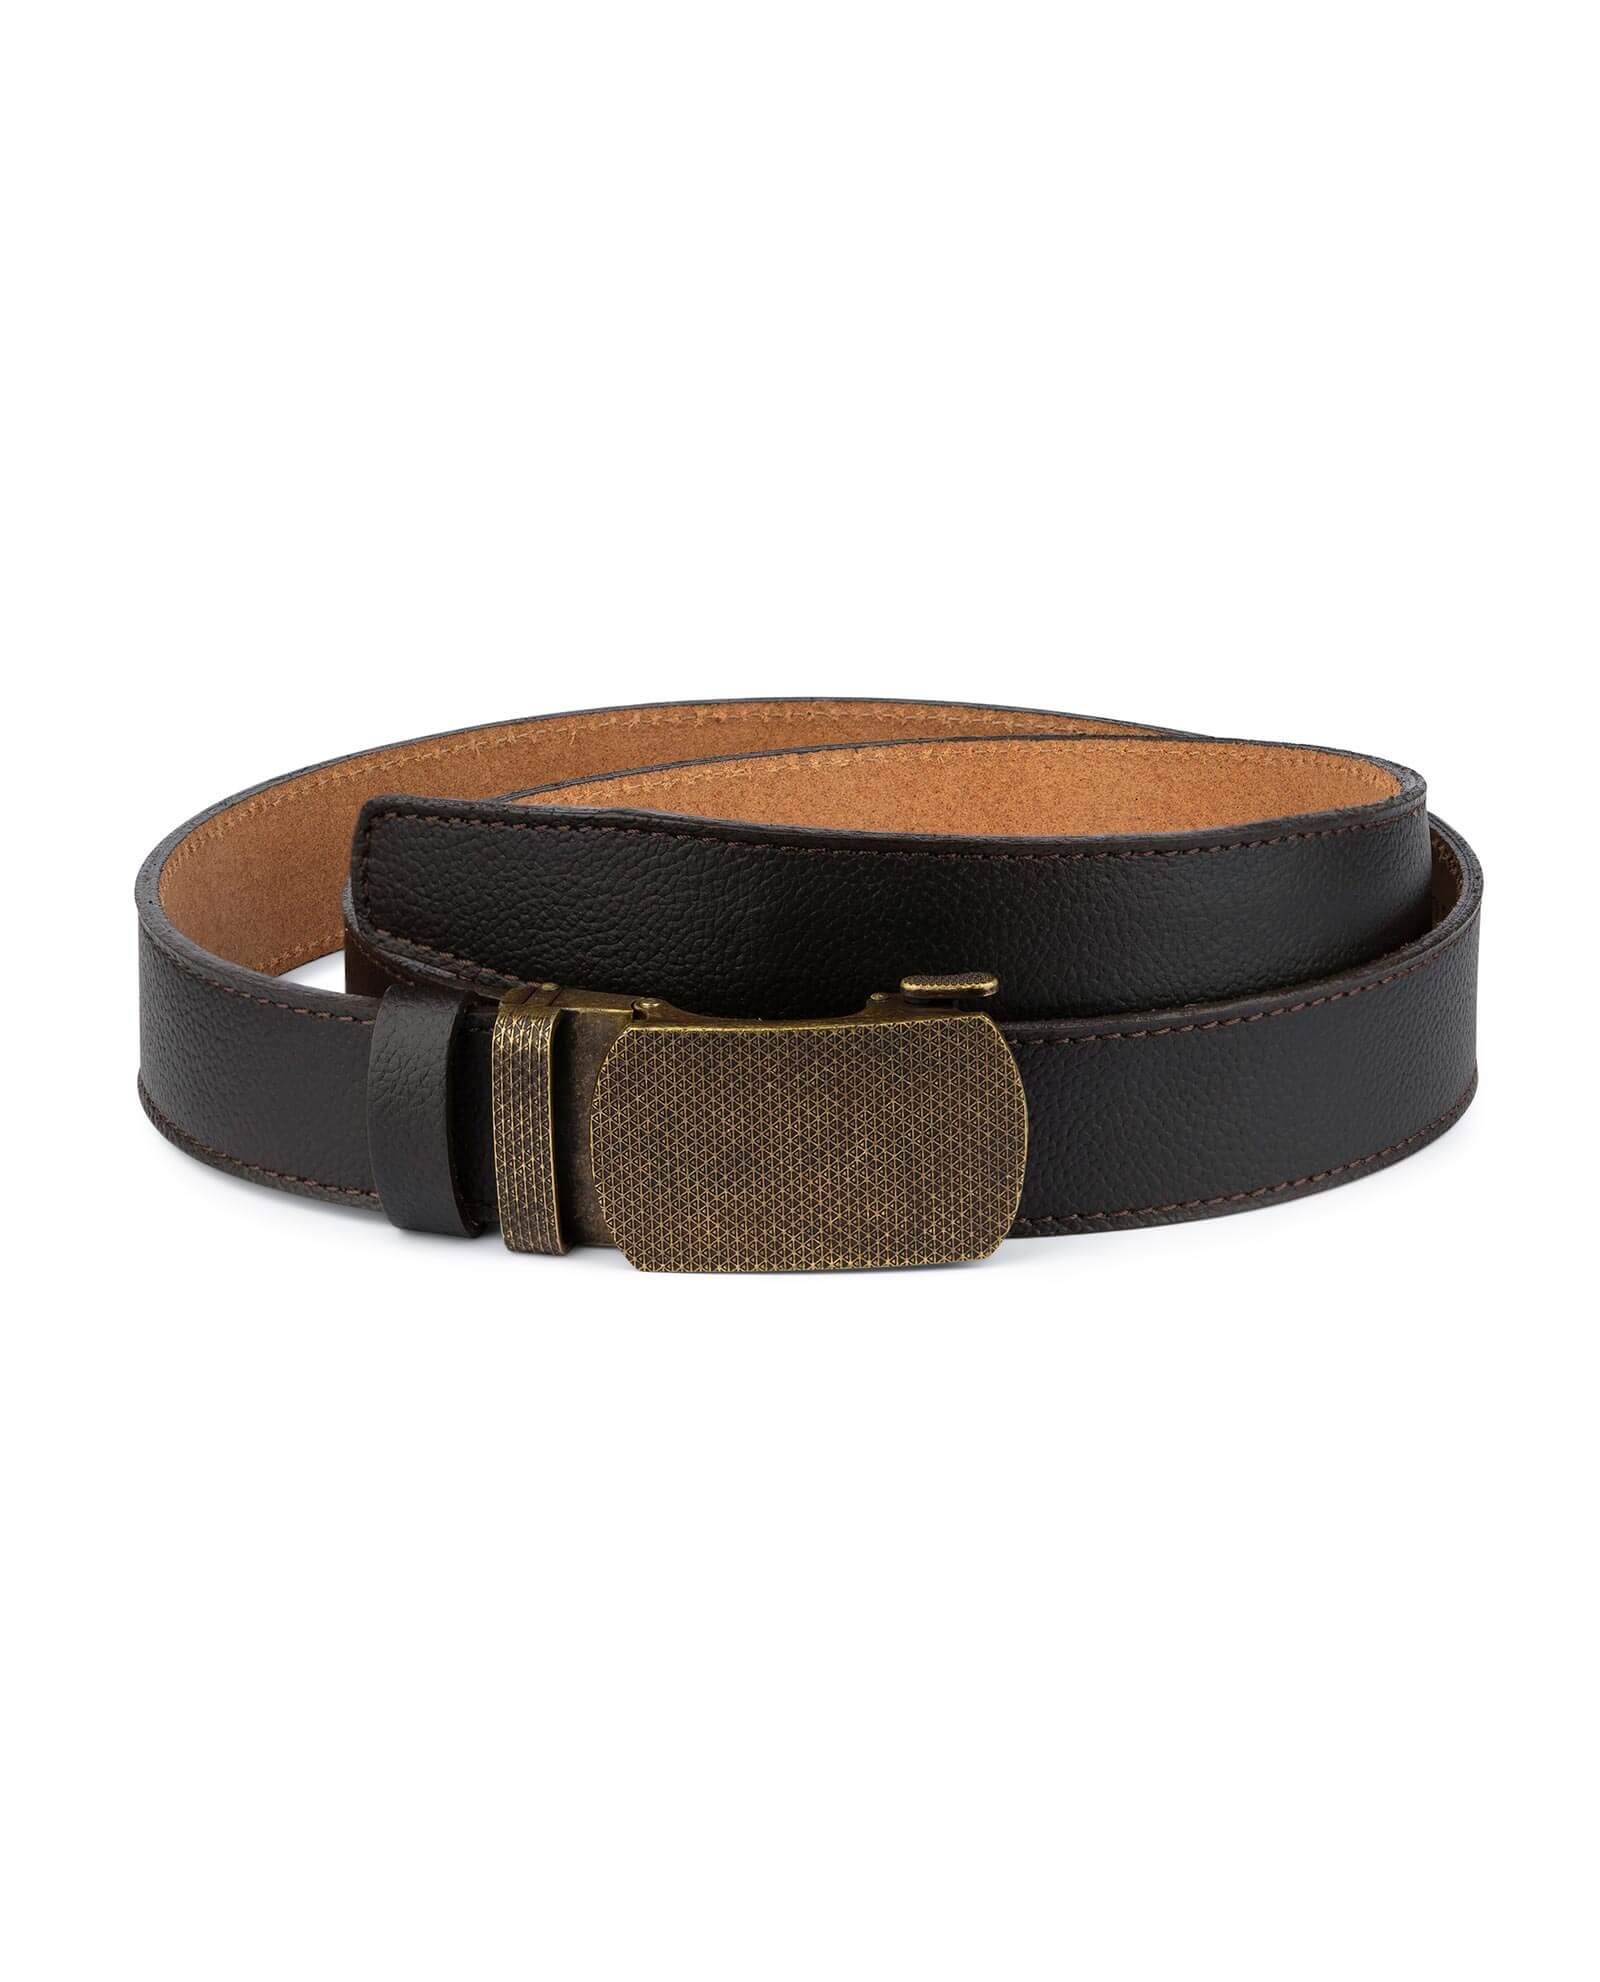 Buy Brown Ratchet Strap Belt | Bronze Buckle | LeatherBeltsOnline.com